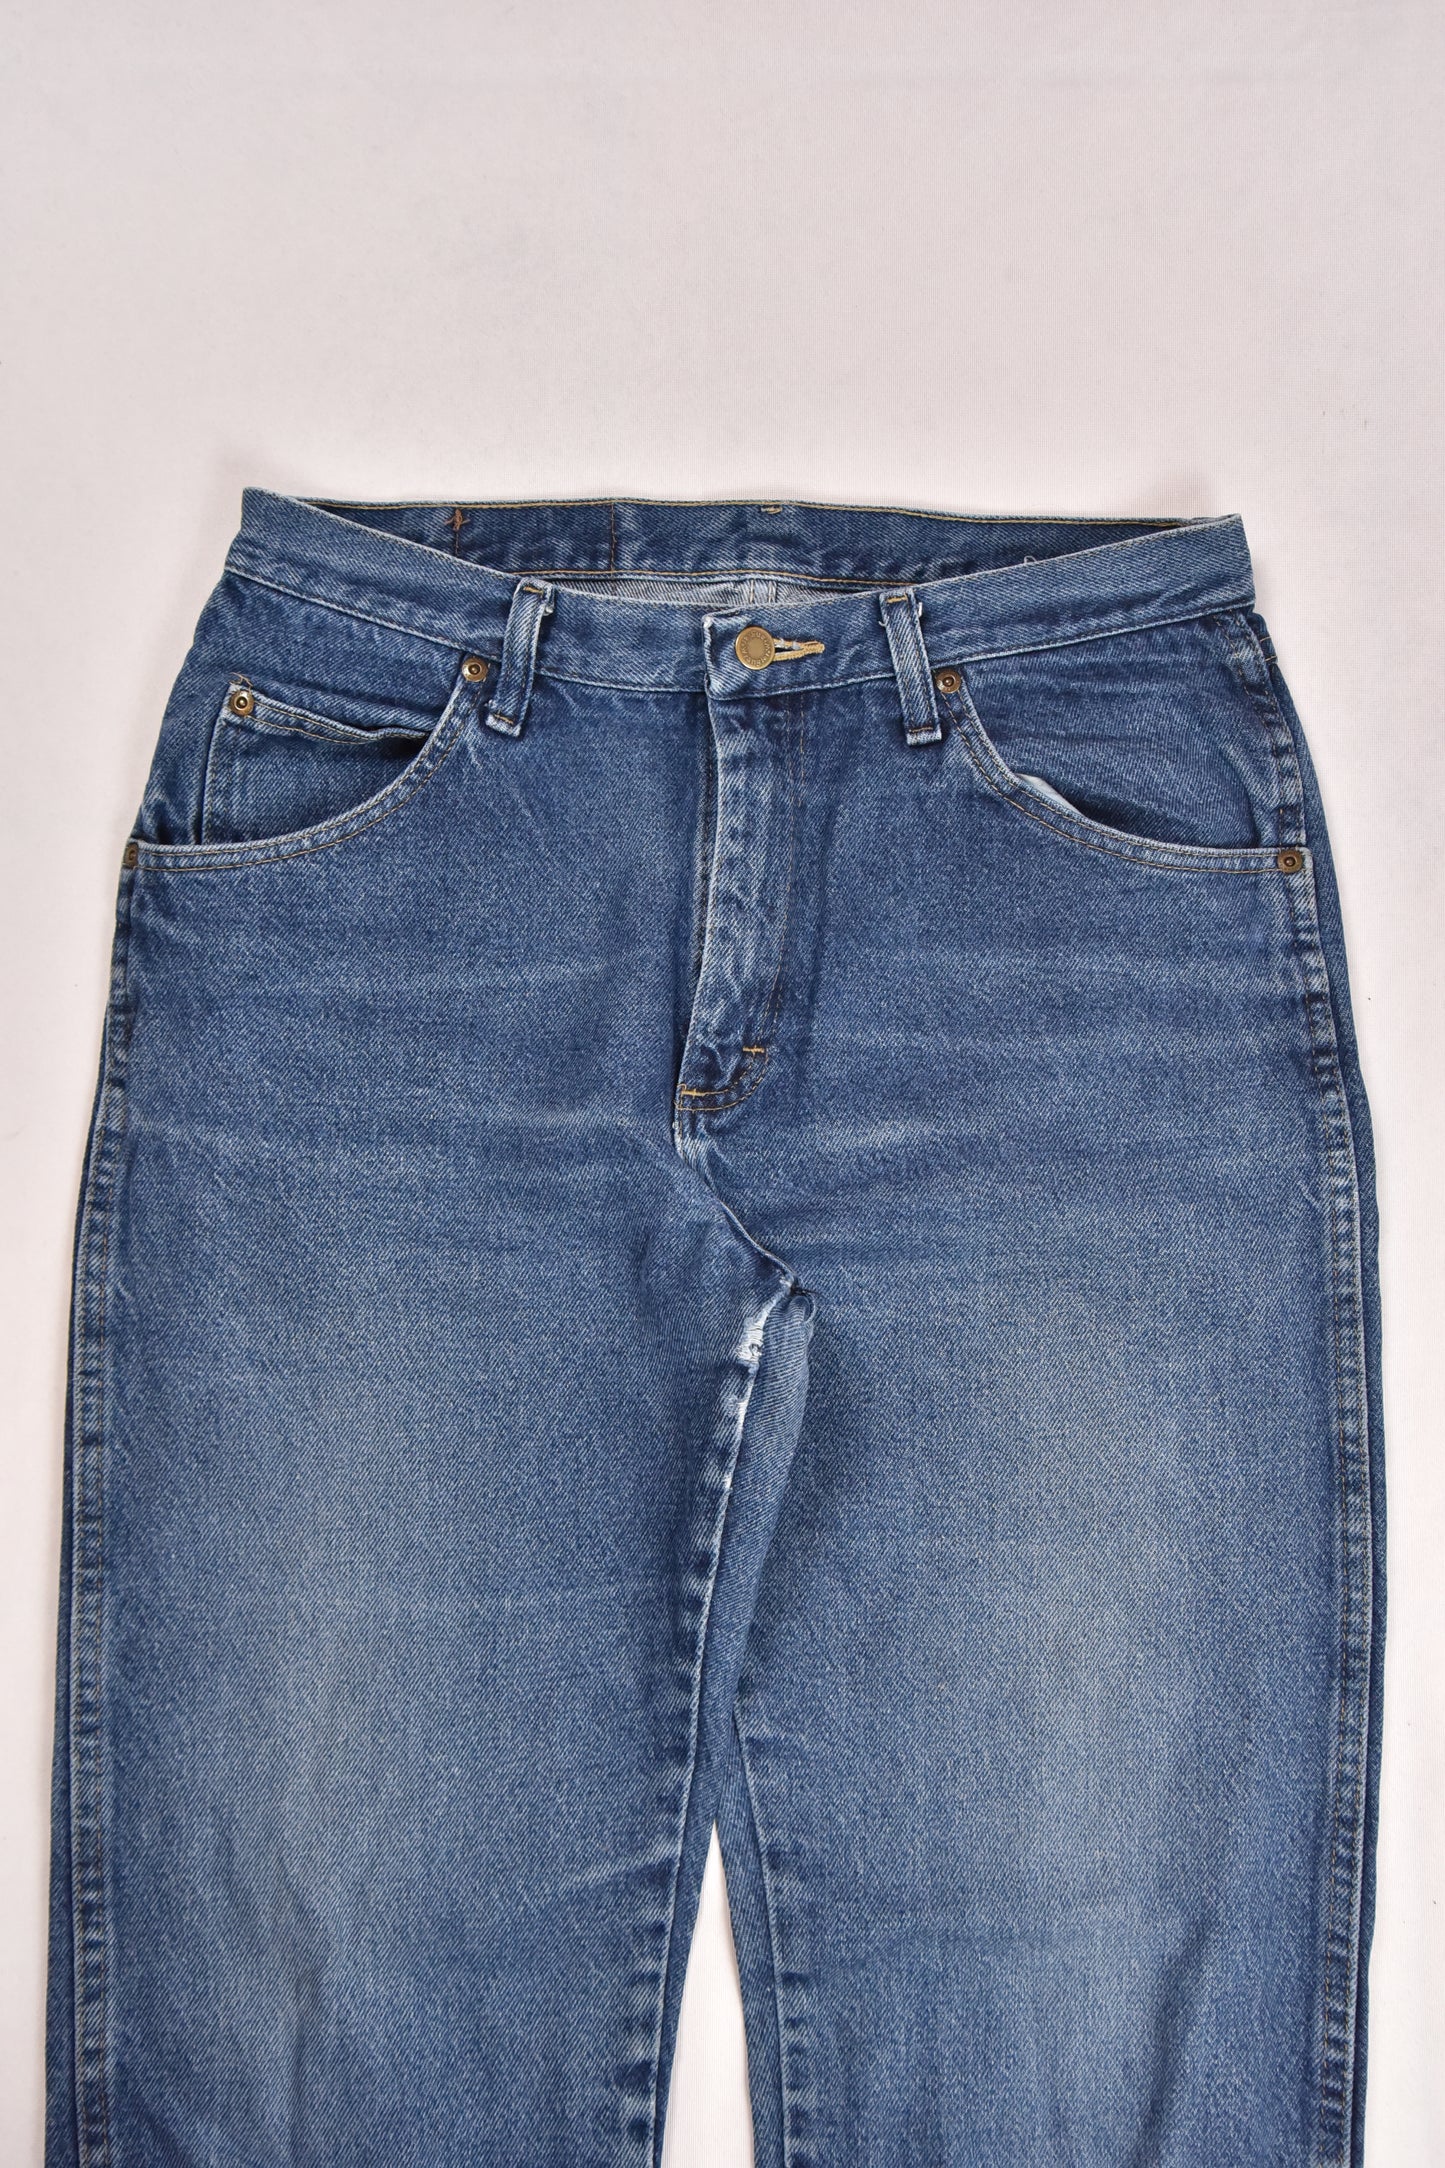 Vintage Wrangler Jeans / 32x34